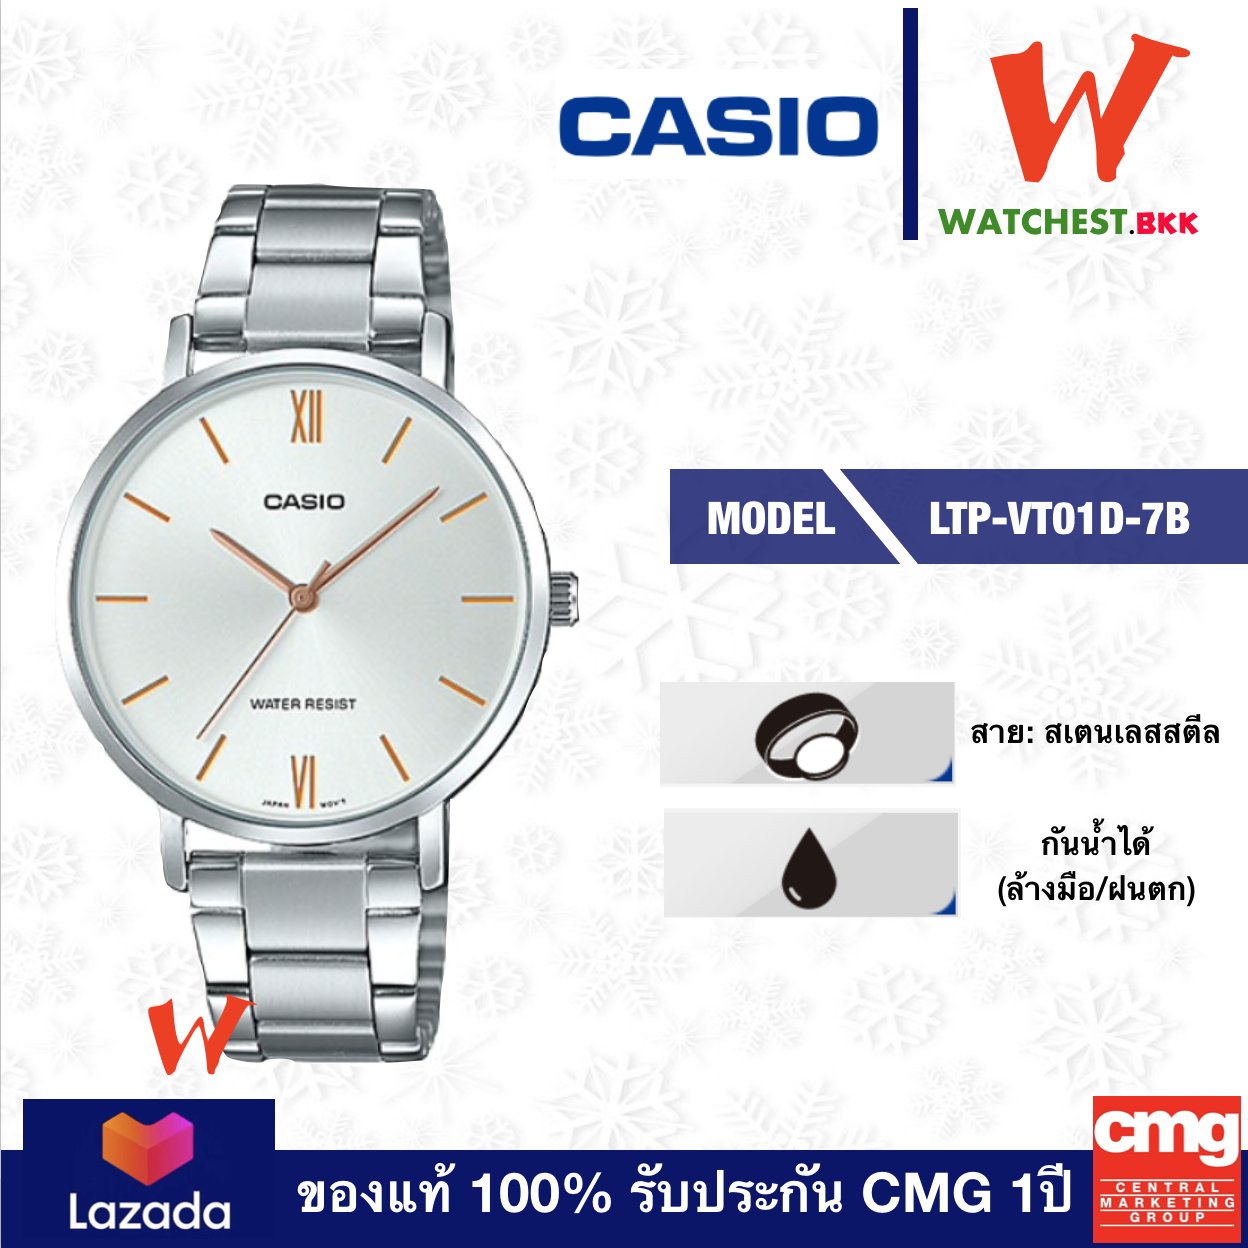 casio นาฬิกาข้อมือผู้หญิง สายสเตนเลส รุ่น LTP-VT01D-7B คาสิโอ้ สายเหล็ก ตัวล็อกบานพับ (watchestbkk คาสิโอ แท้ ของแท้100% ประกัน CMG)